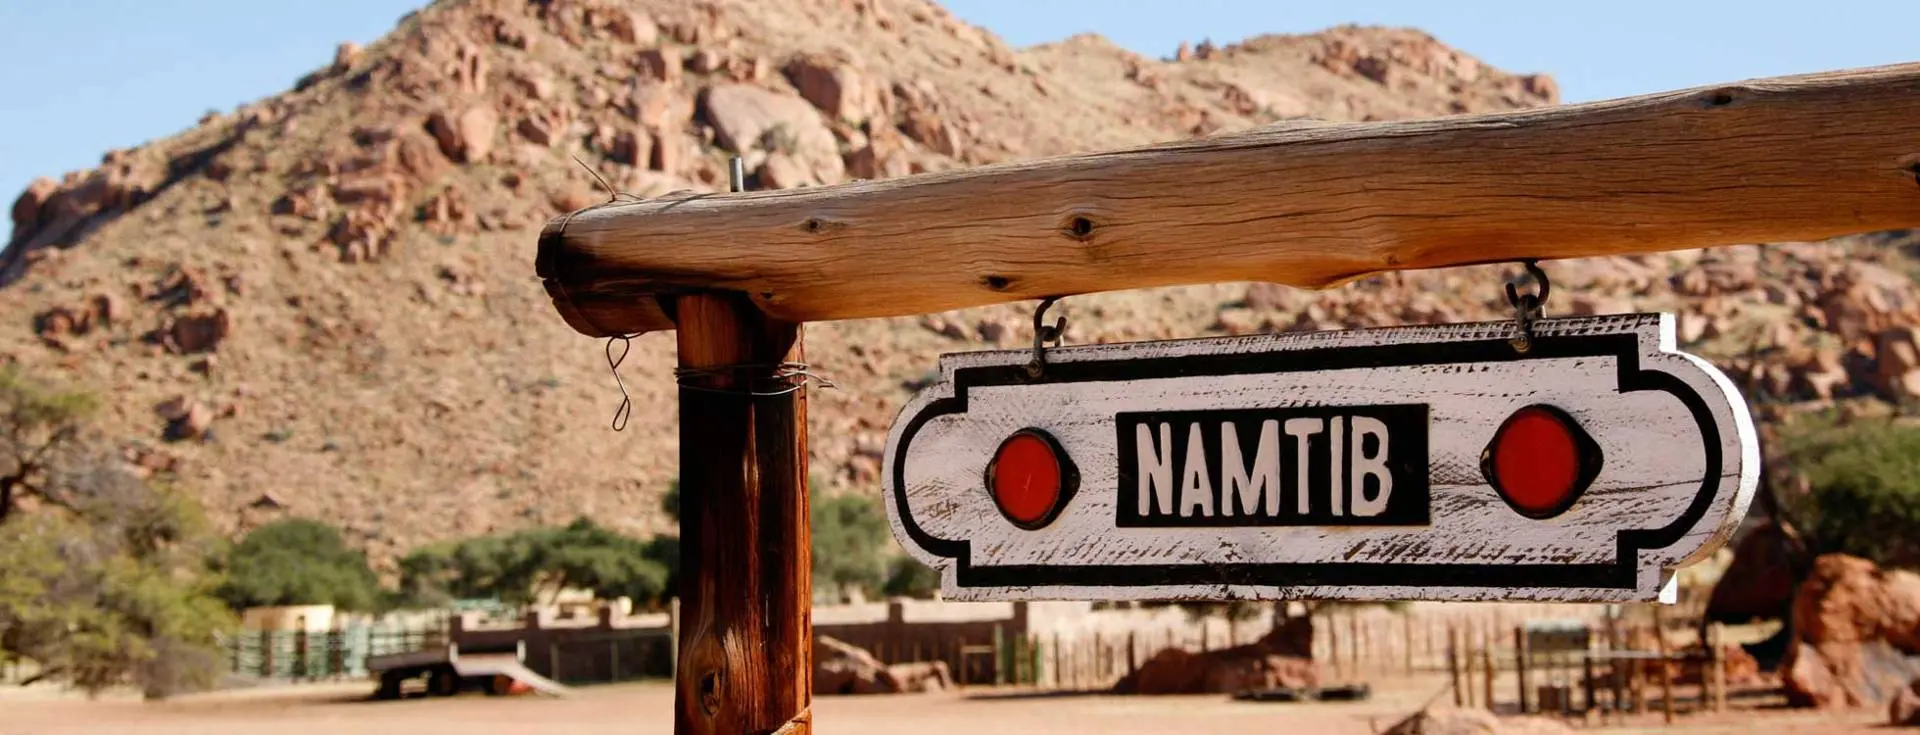 Namtib Desert Lodge and Biosphere Reserve